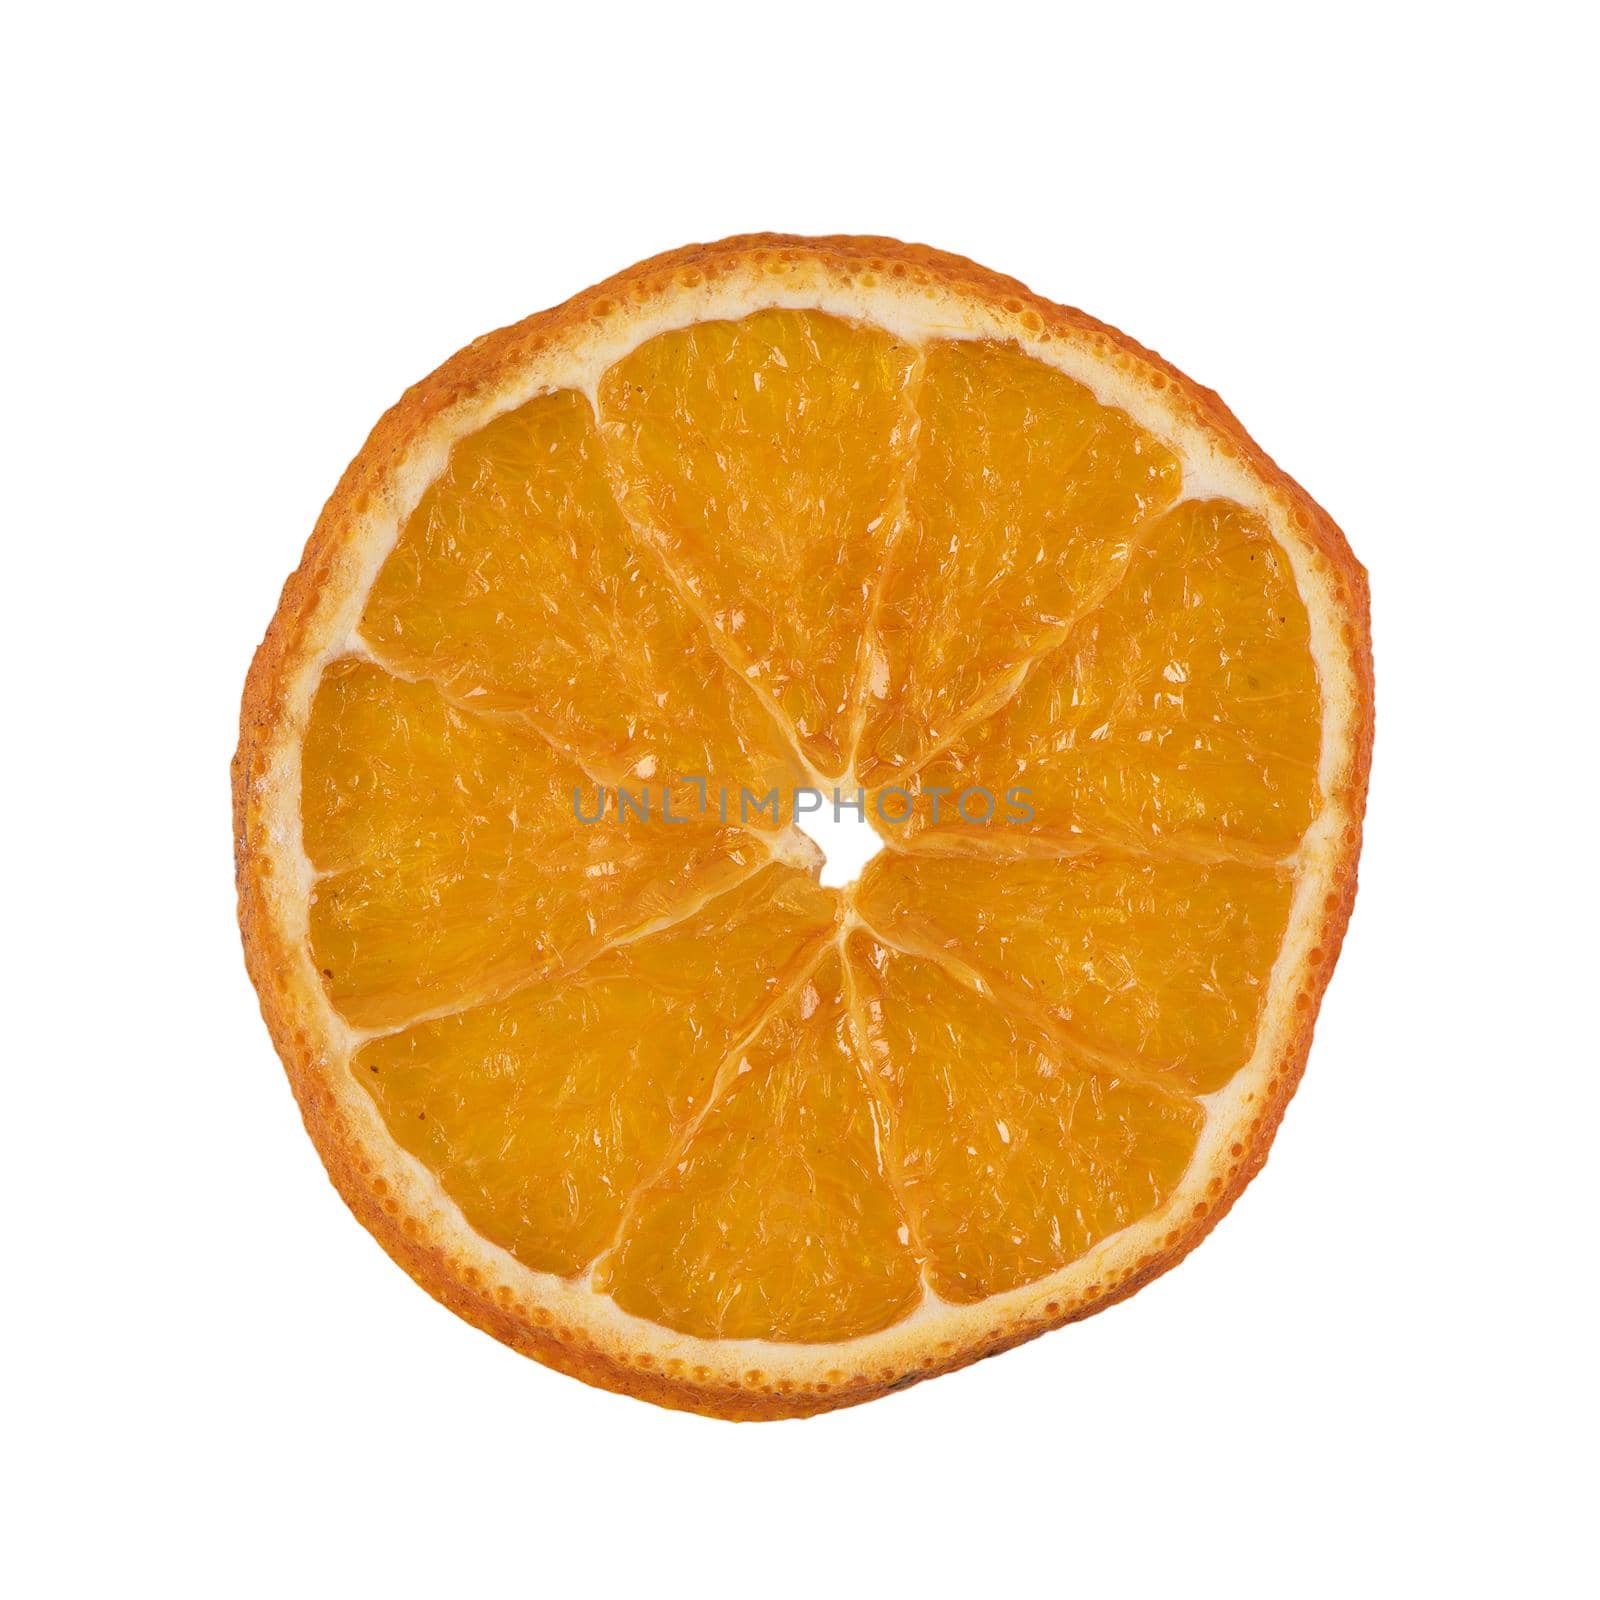 Dried slice of orange by homydesign